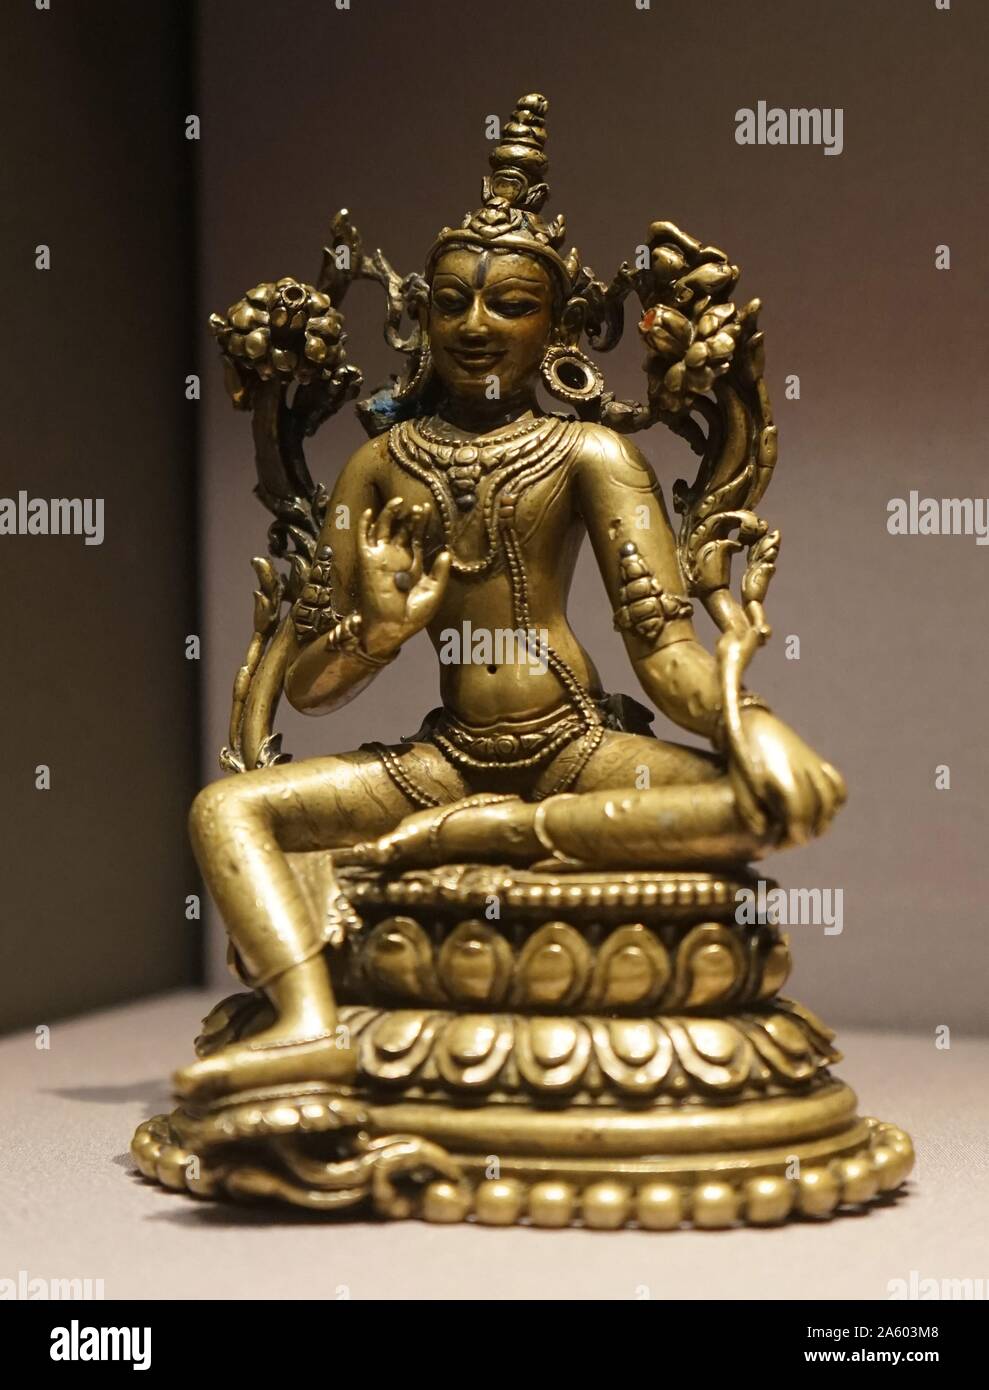 Asentado de bronce figuras de Avalokiteshvara, la manifestación terrenal de la auto-nacido eterno Buda Amitabha. Fecha del siglo XII. Foto de stock